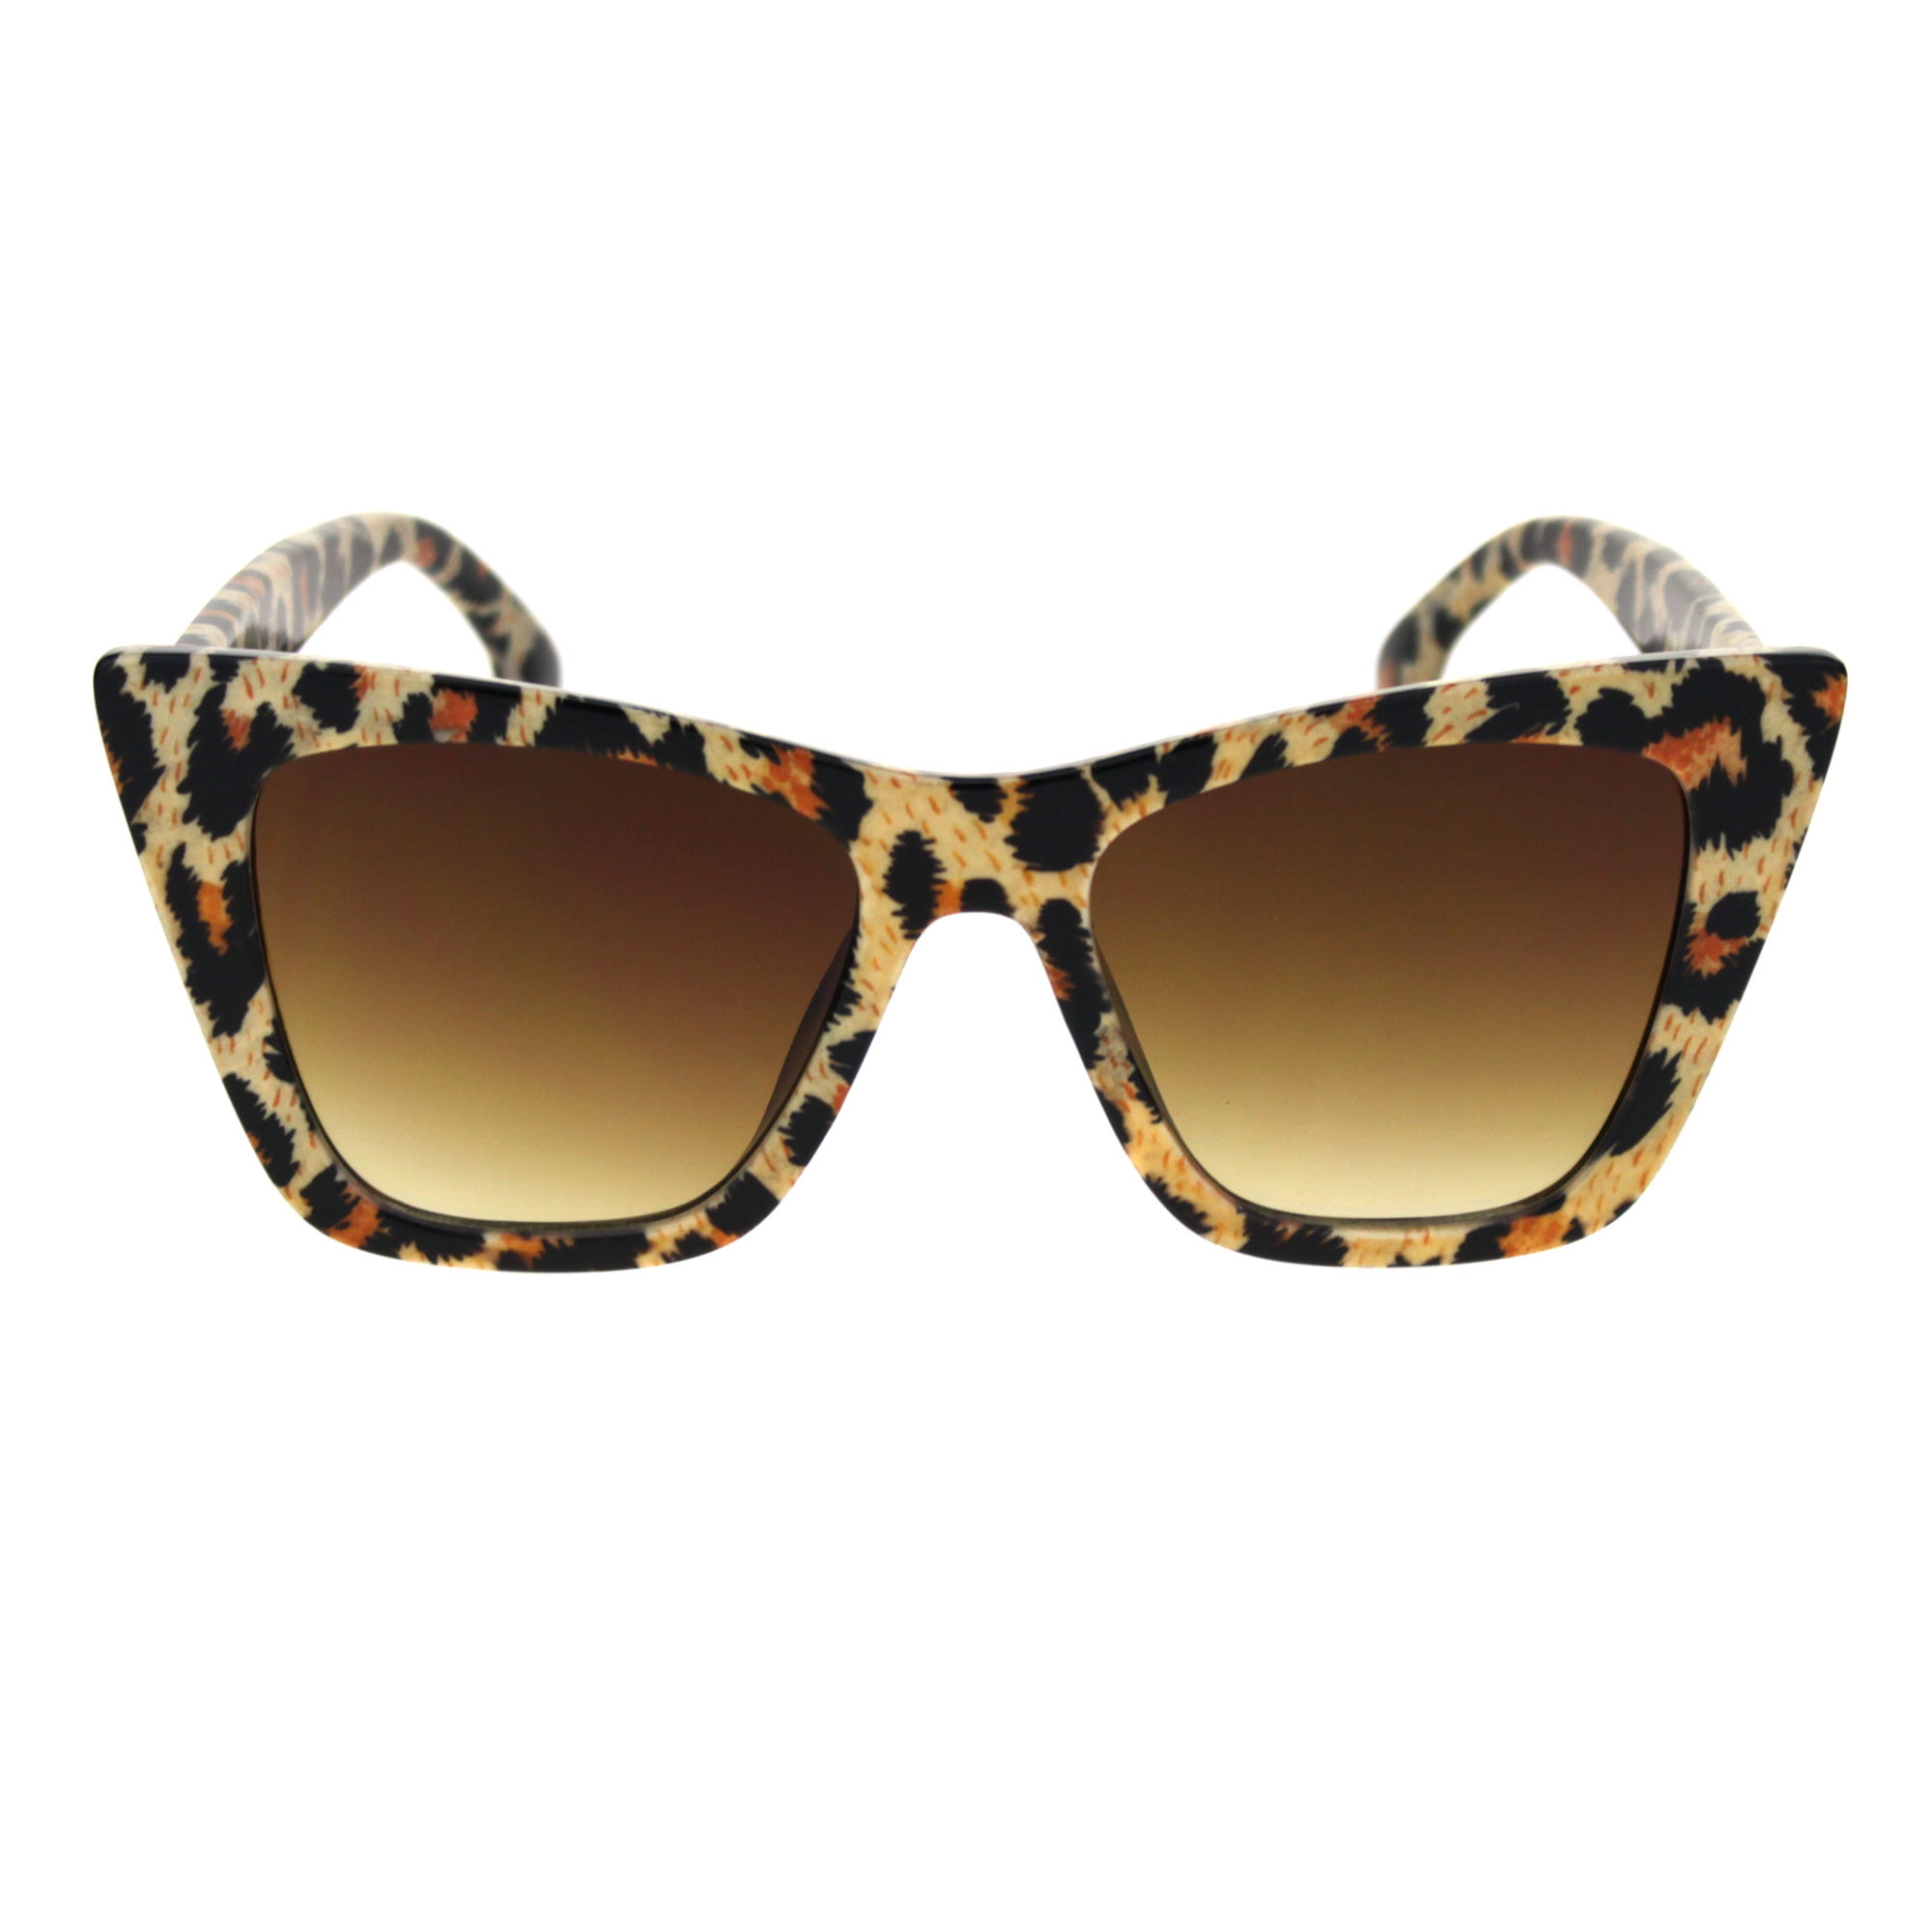 Womens Mens Cheetah Leopard Tortoise Print Fashion Sunglasses HIPSTER Cute Nerd 